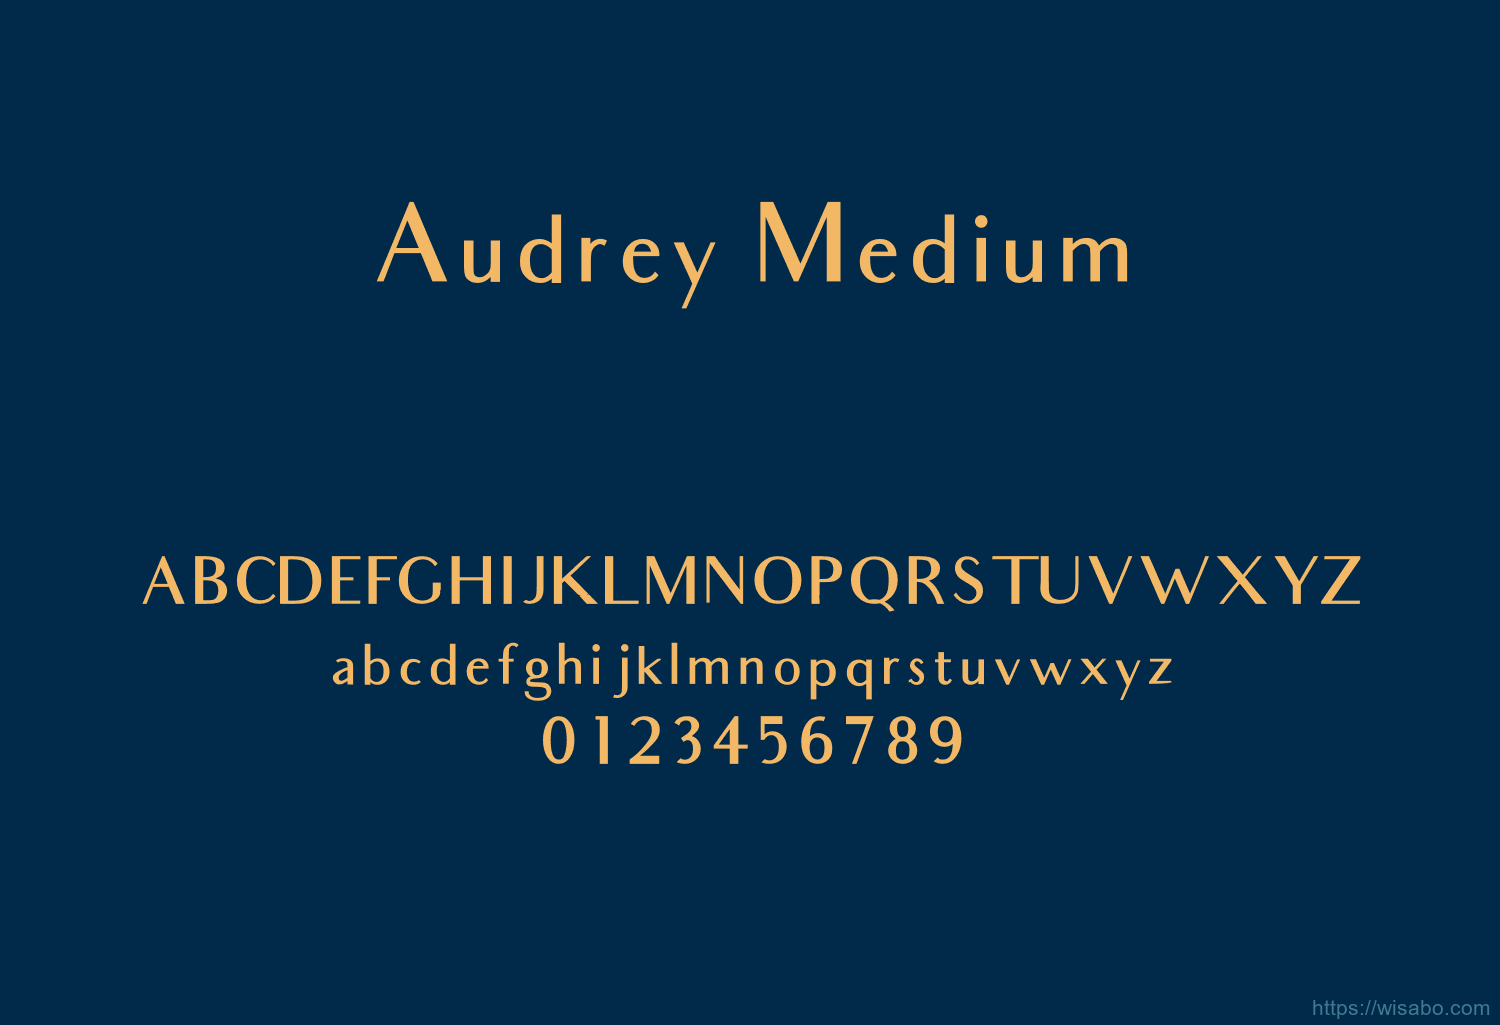 Audrey Medium